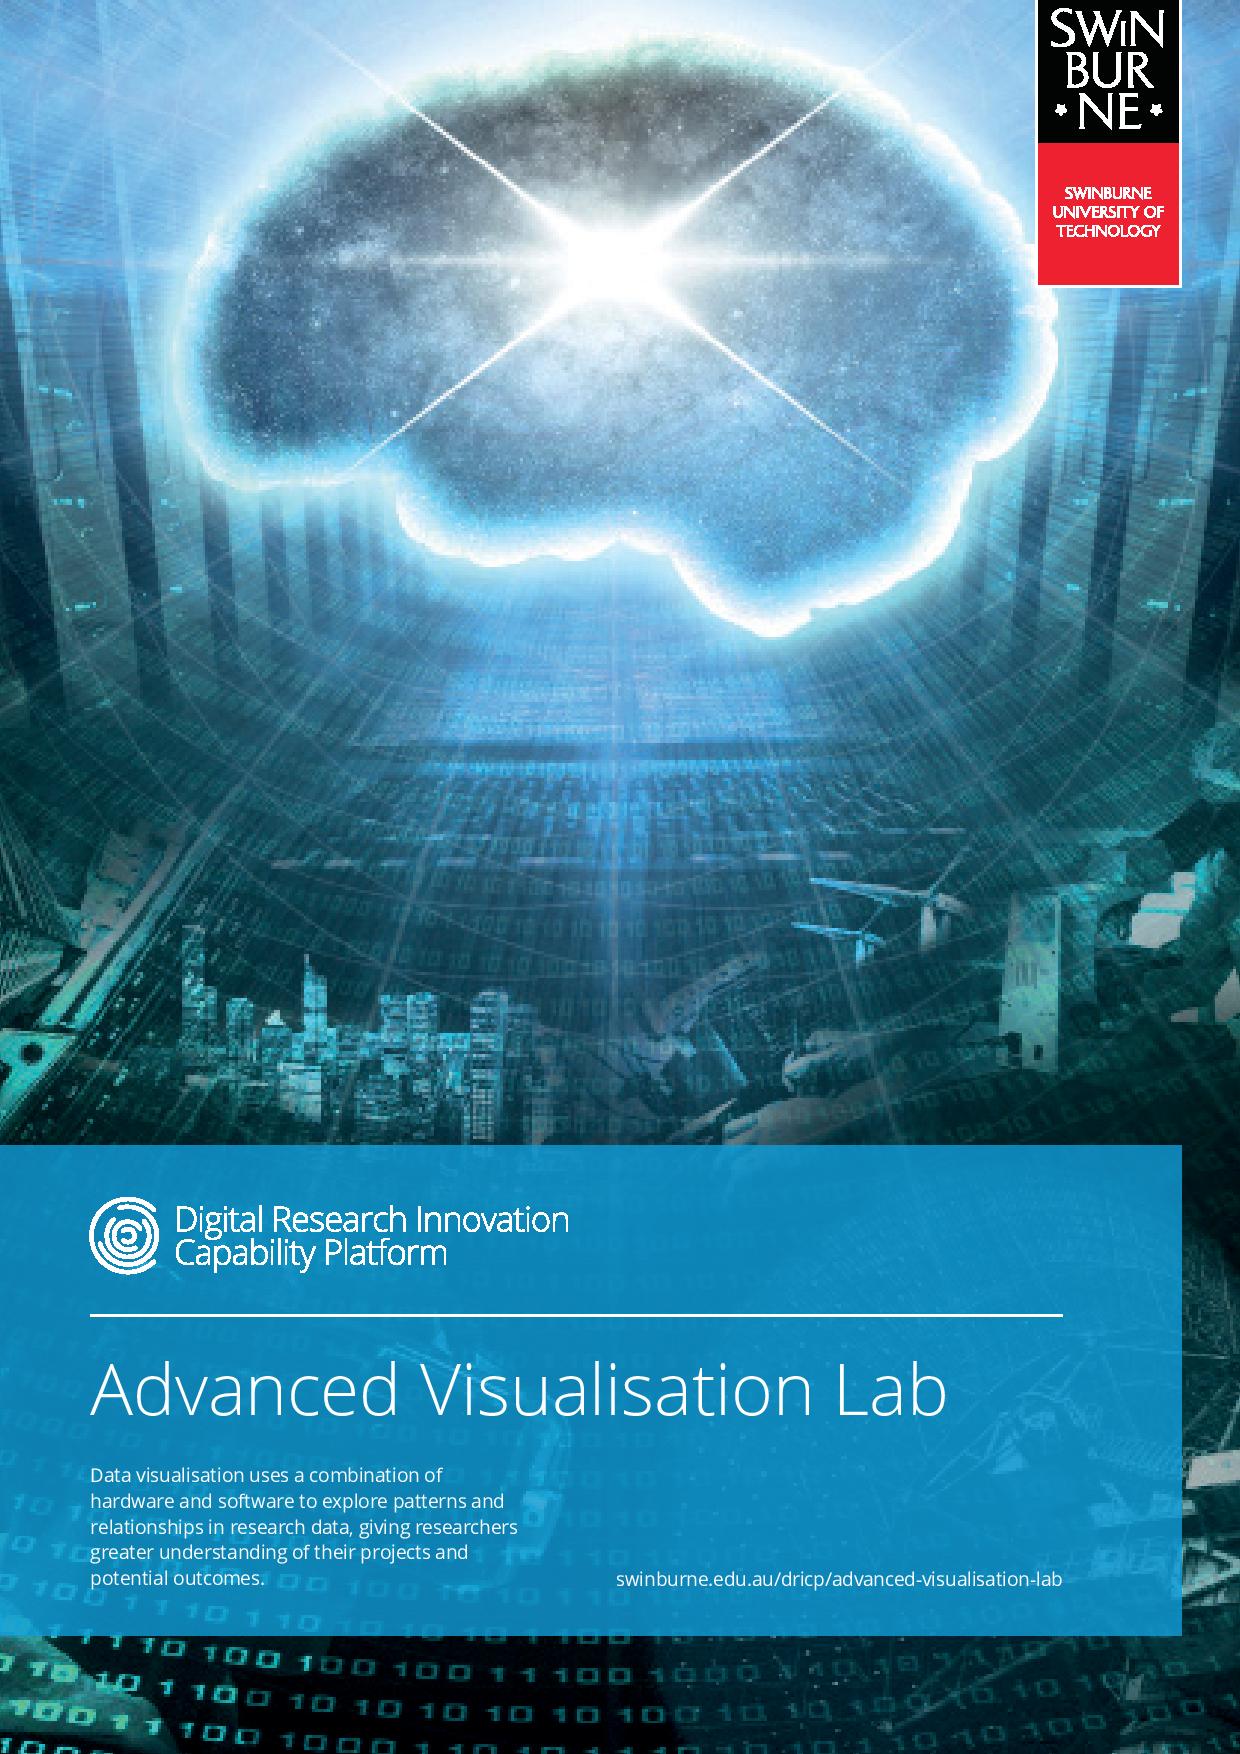 The Advanced Visualisation Lab